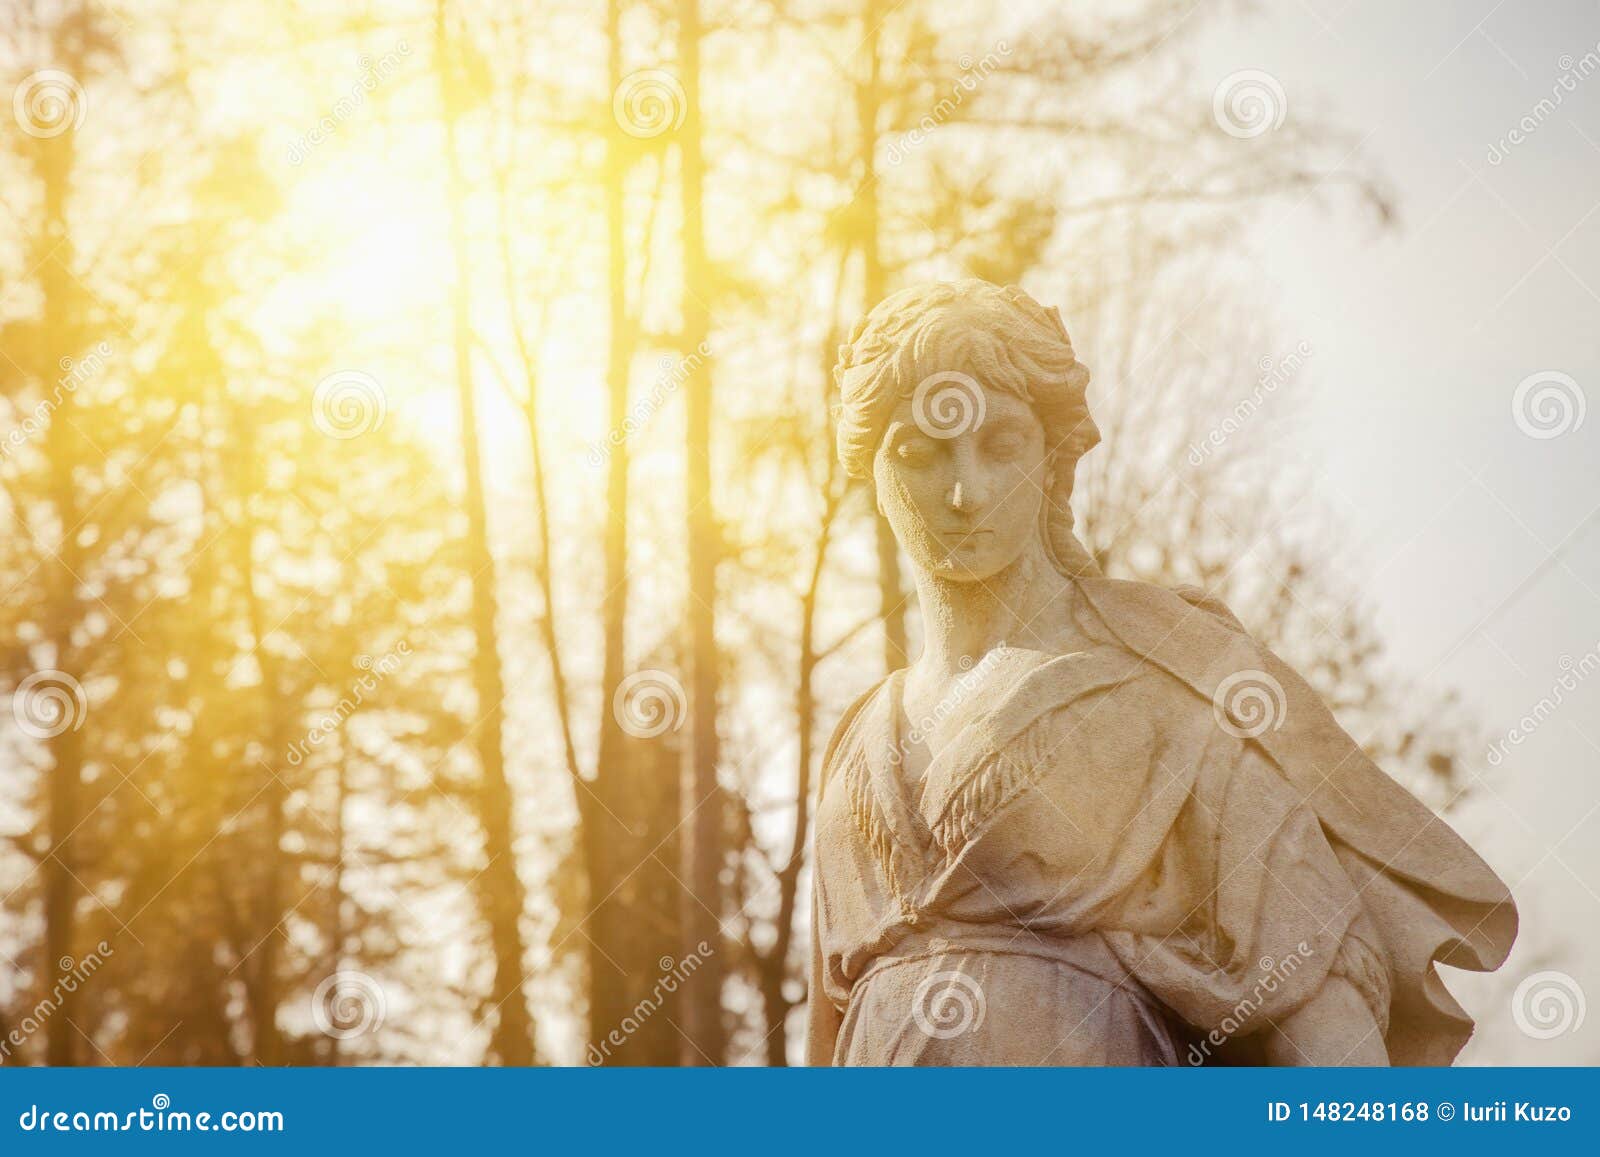 the goddess of love in greek mythology, aphrodite venus in roman mythology fragment of ancient statue in sunlight